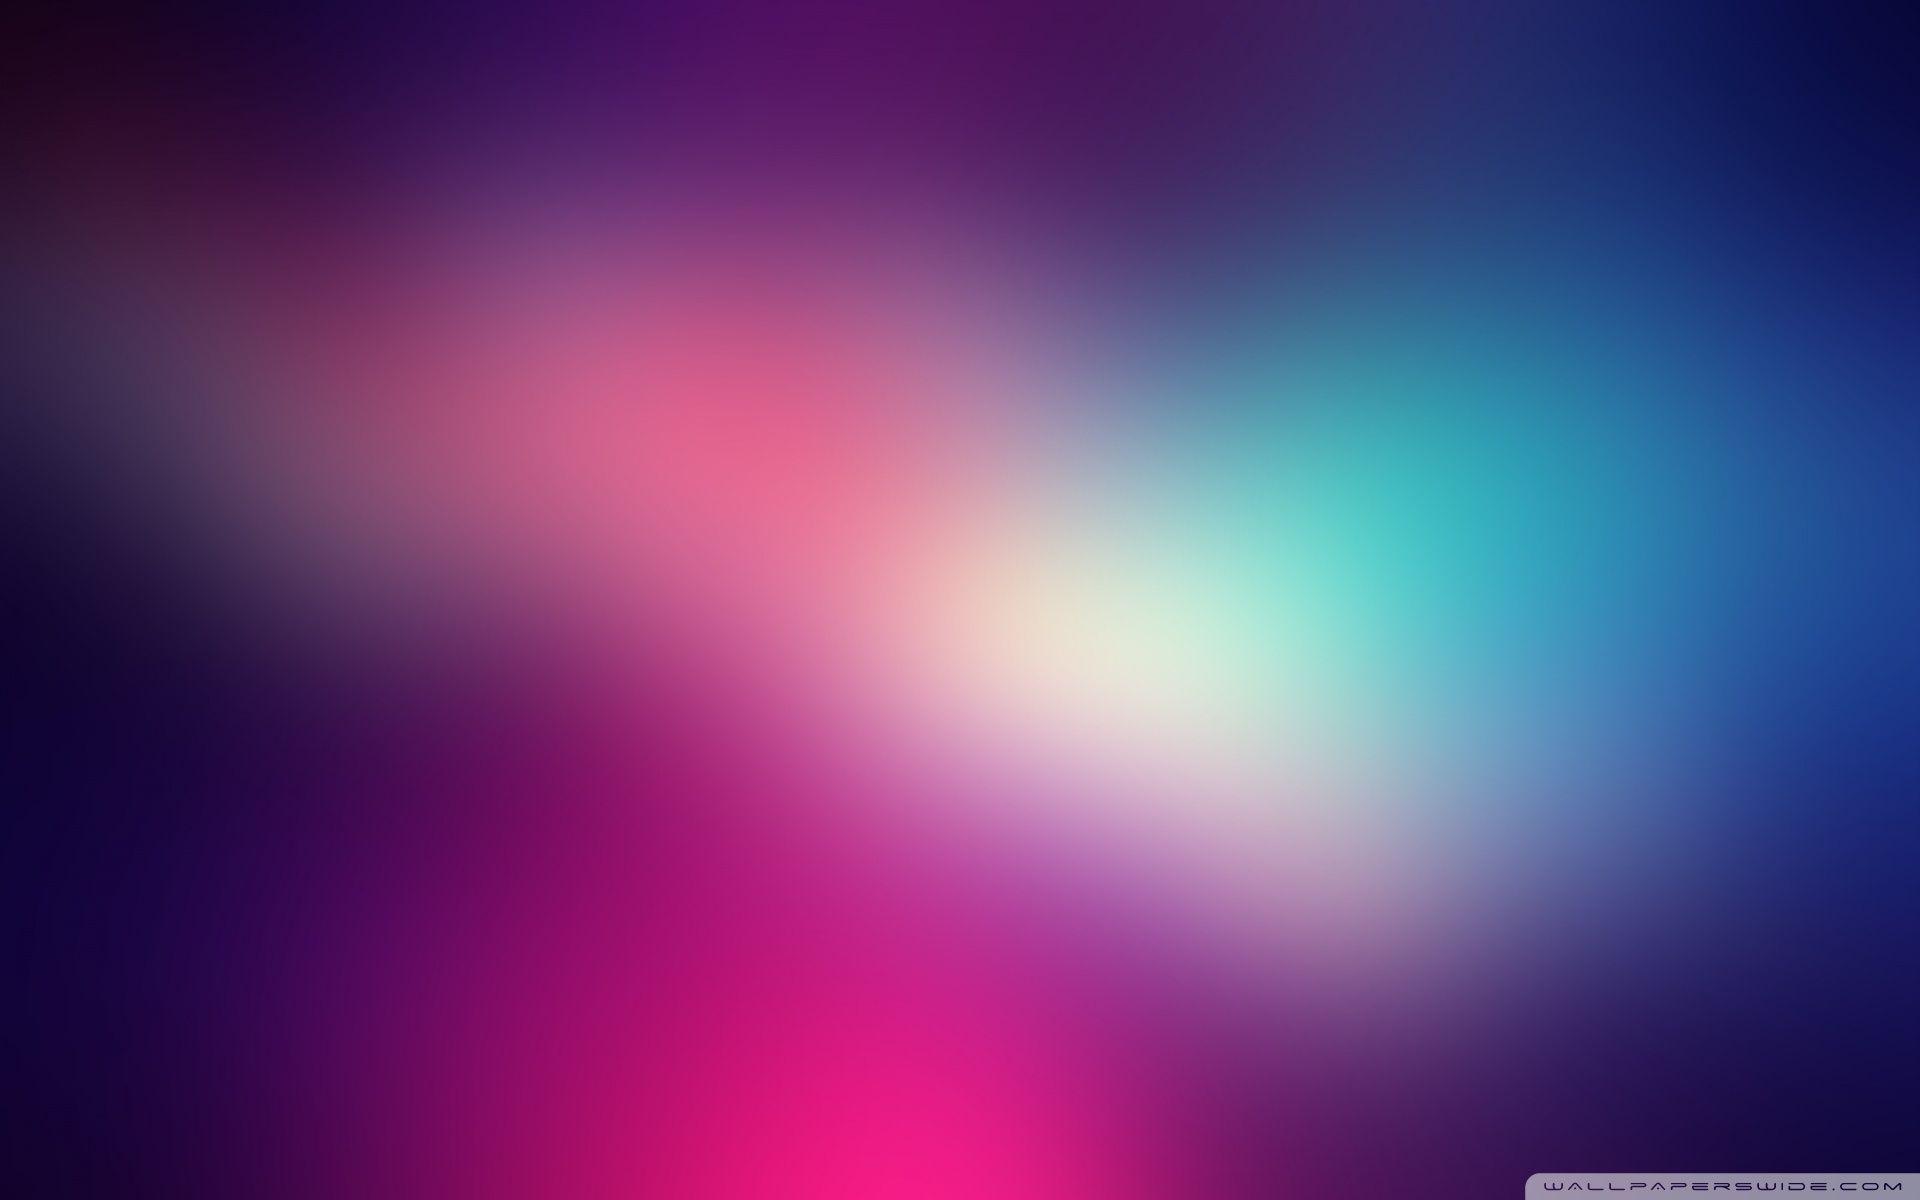 Blurred Purple Ultra HD Desktop Background Wallpaper for 4K UHD TV, Multi Display, Dual Monitor, Tablet